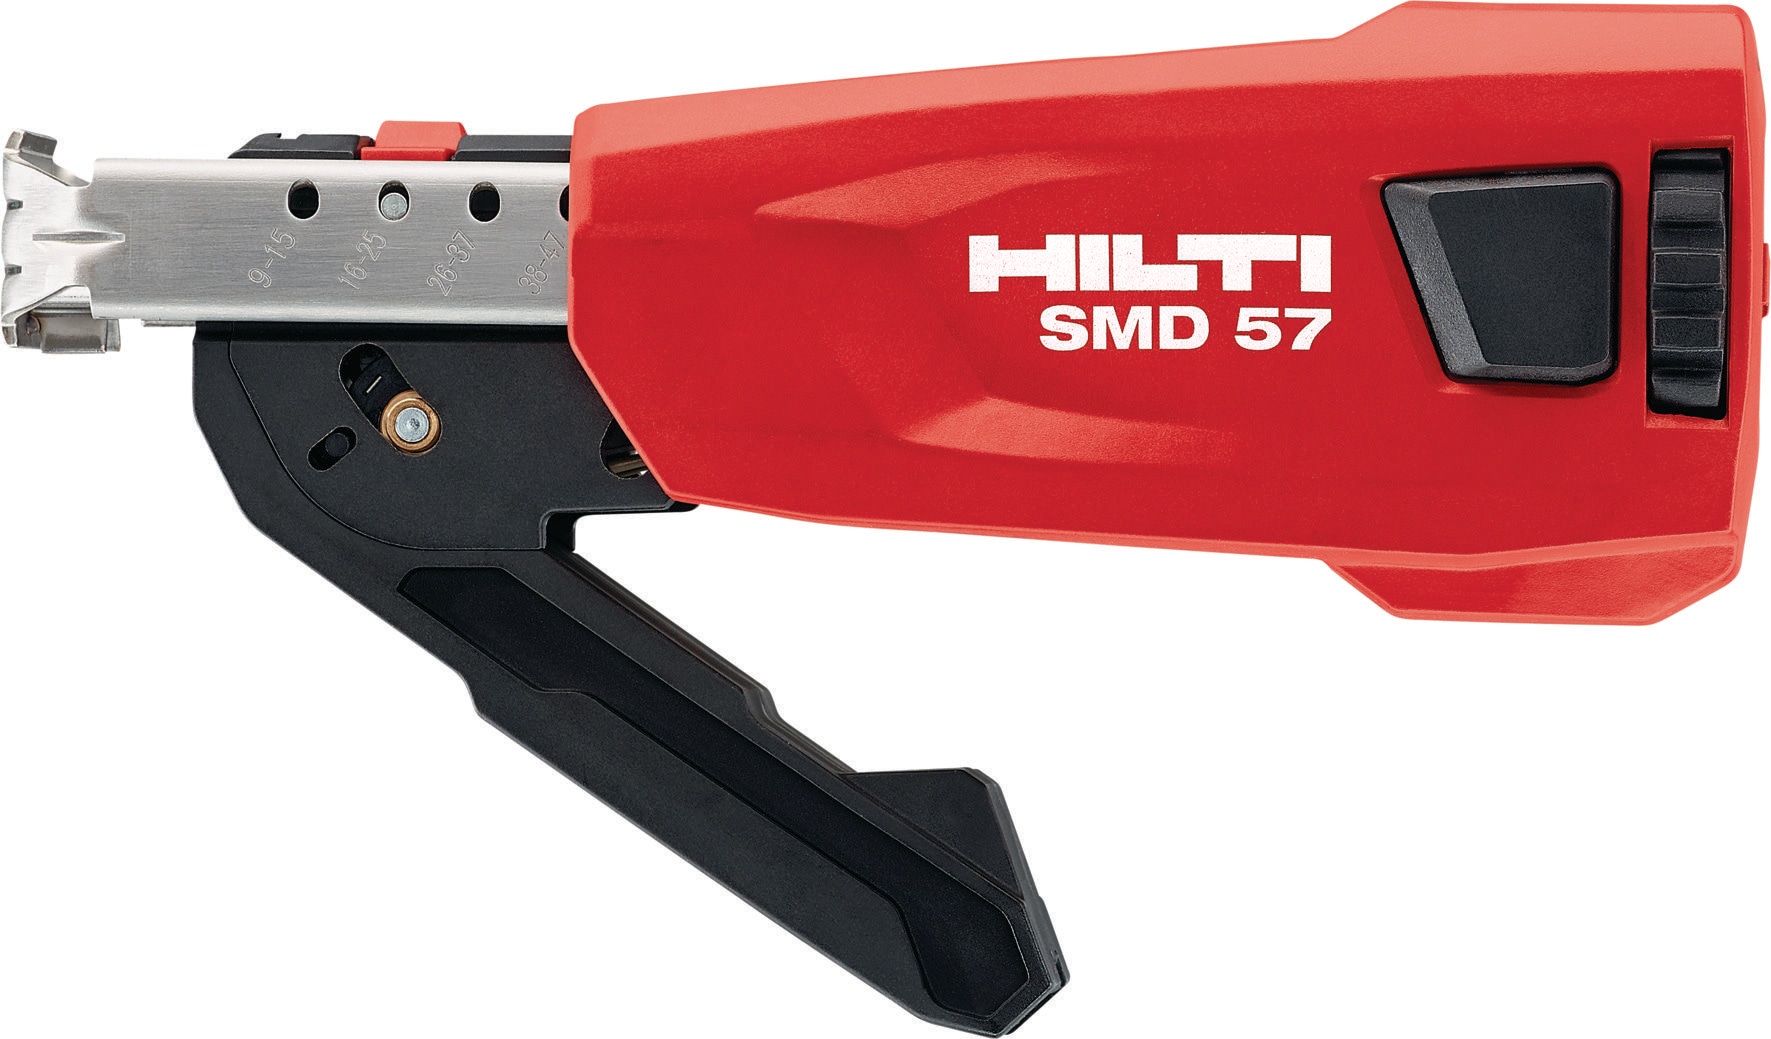 brand new Hilti 1x HILTI 5mm End Cap for SMD 57 